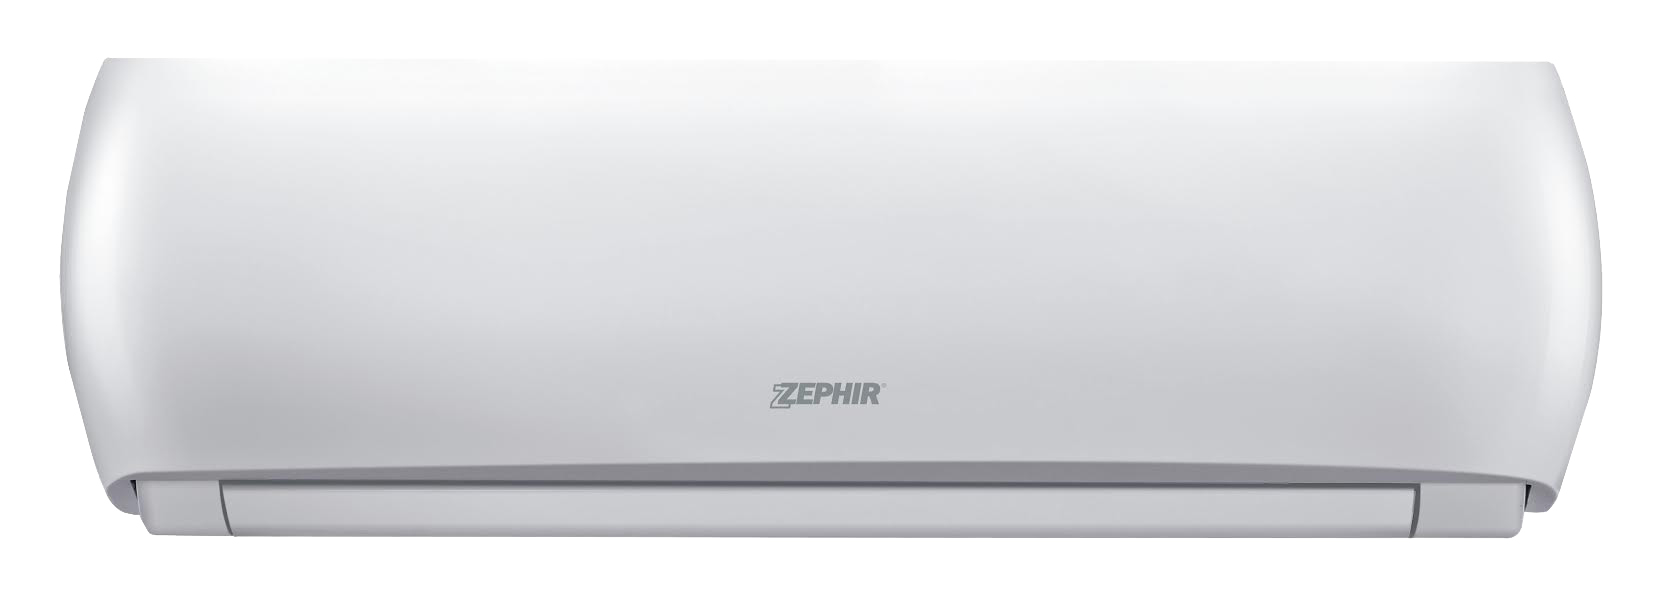 Zpd12001 climatizzatore zephir 12000btu